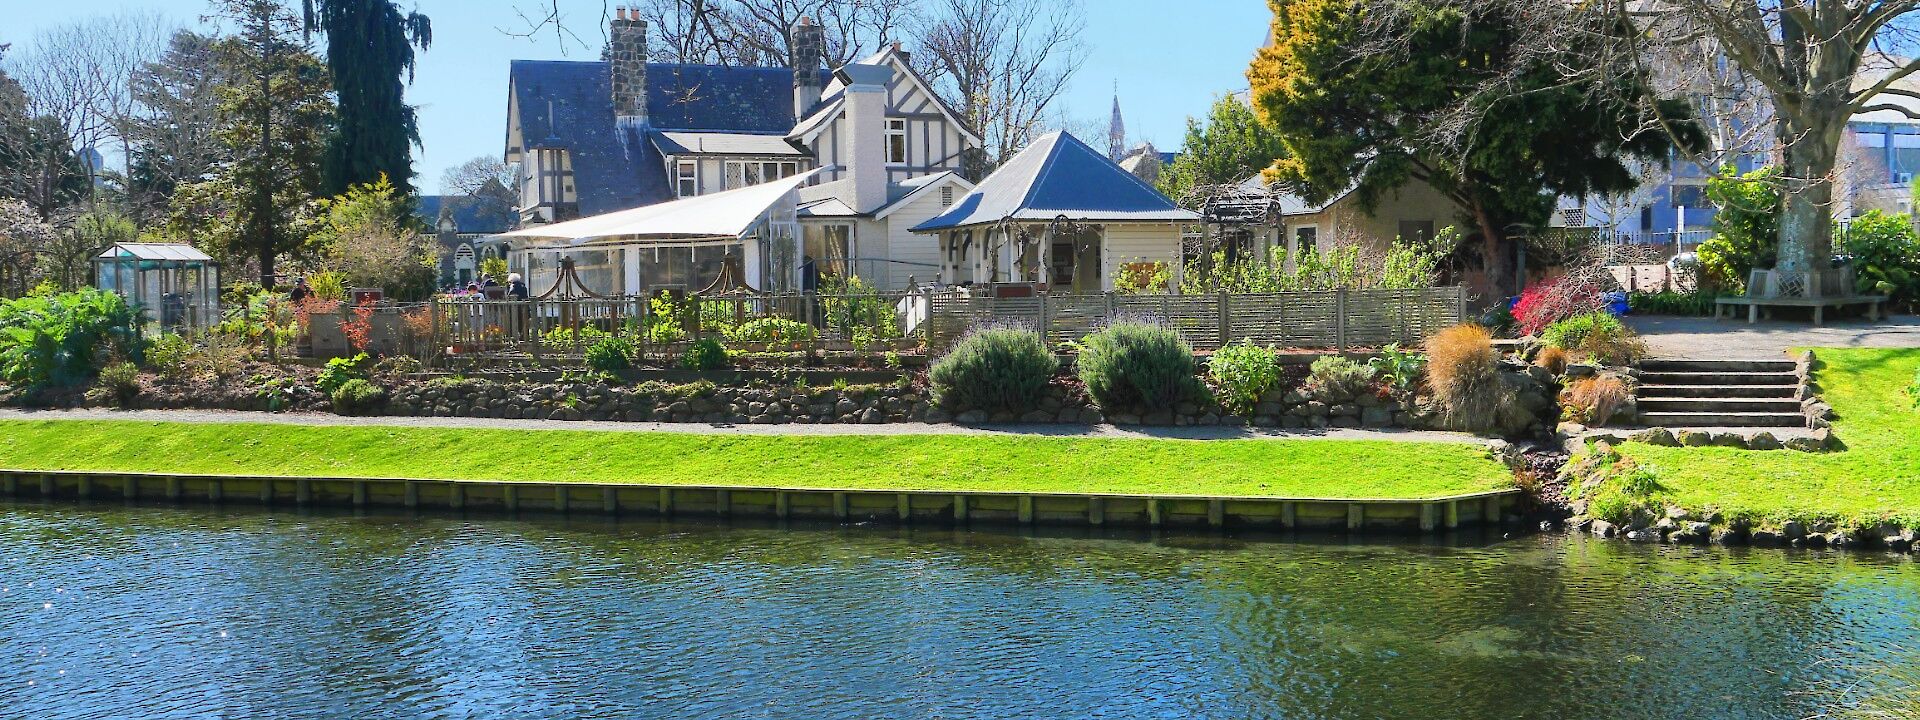 White house with blue roof across the river, Avon River, Christchurch, New Zealand. Brendan Pfahlert@Unsplash